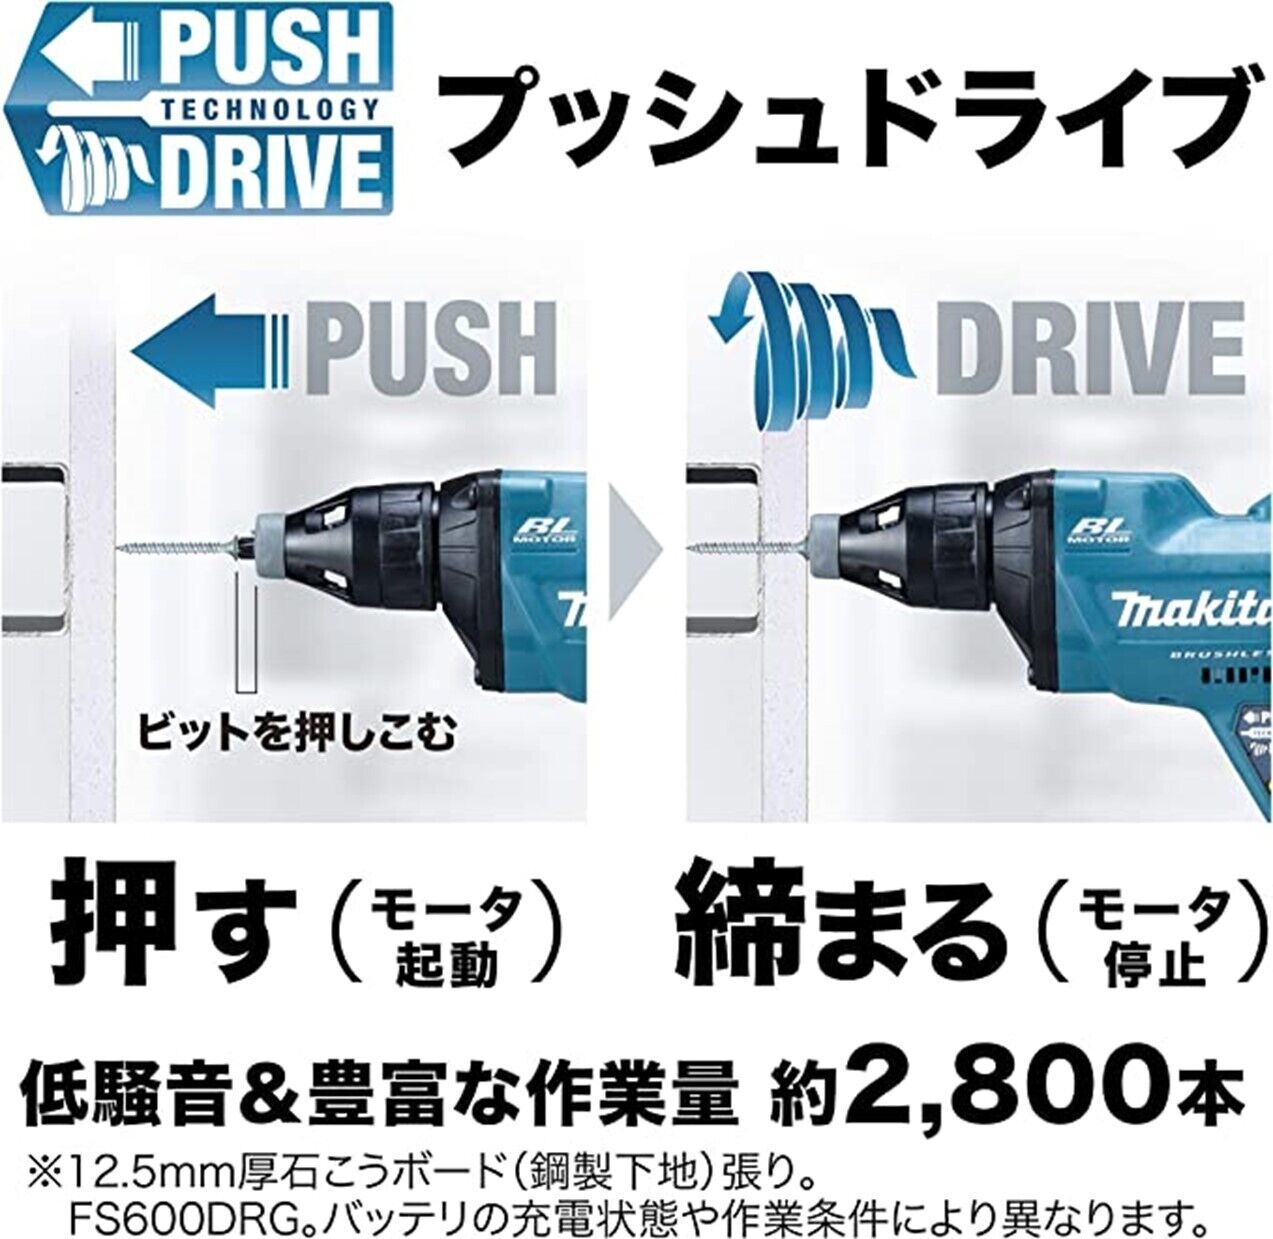 NEW ( Makita ) 18V Push Drive Screwdriver Black Body Only ( FS600DZB ) JP